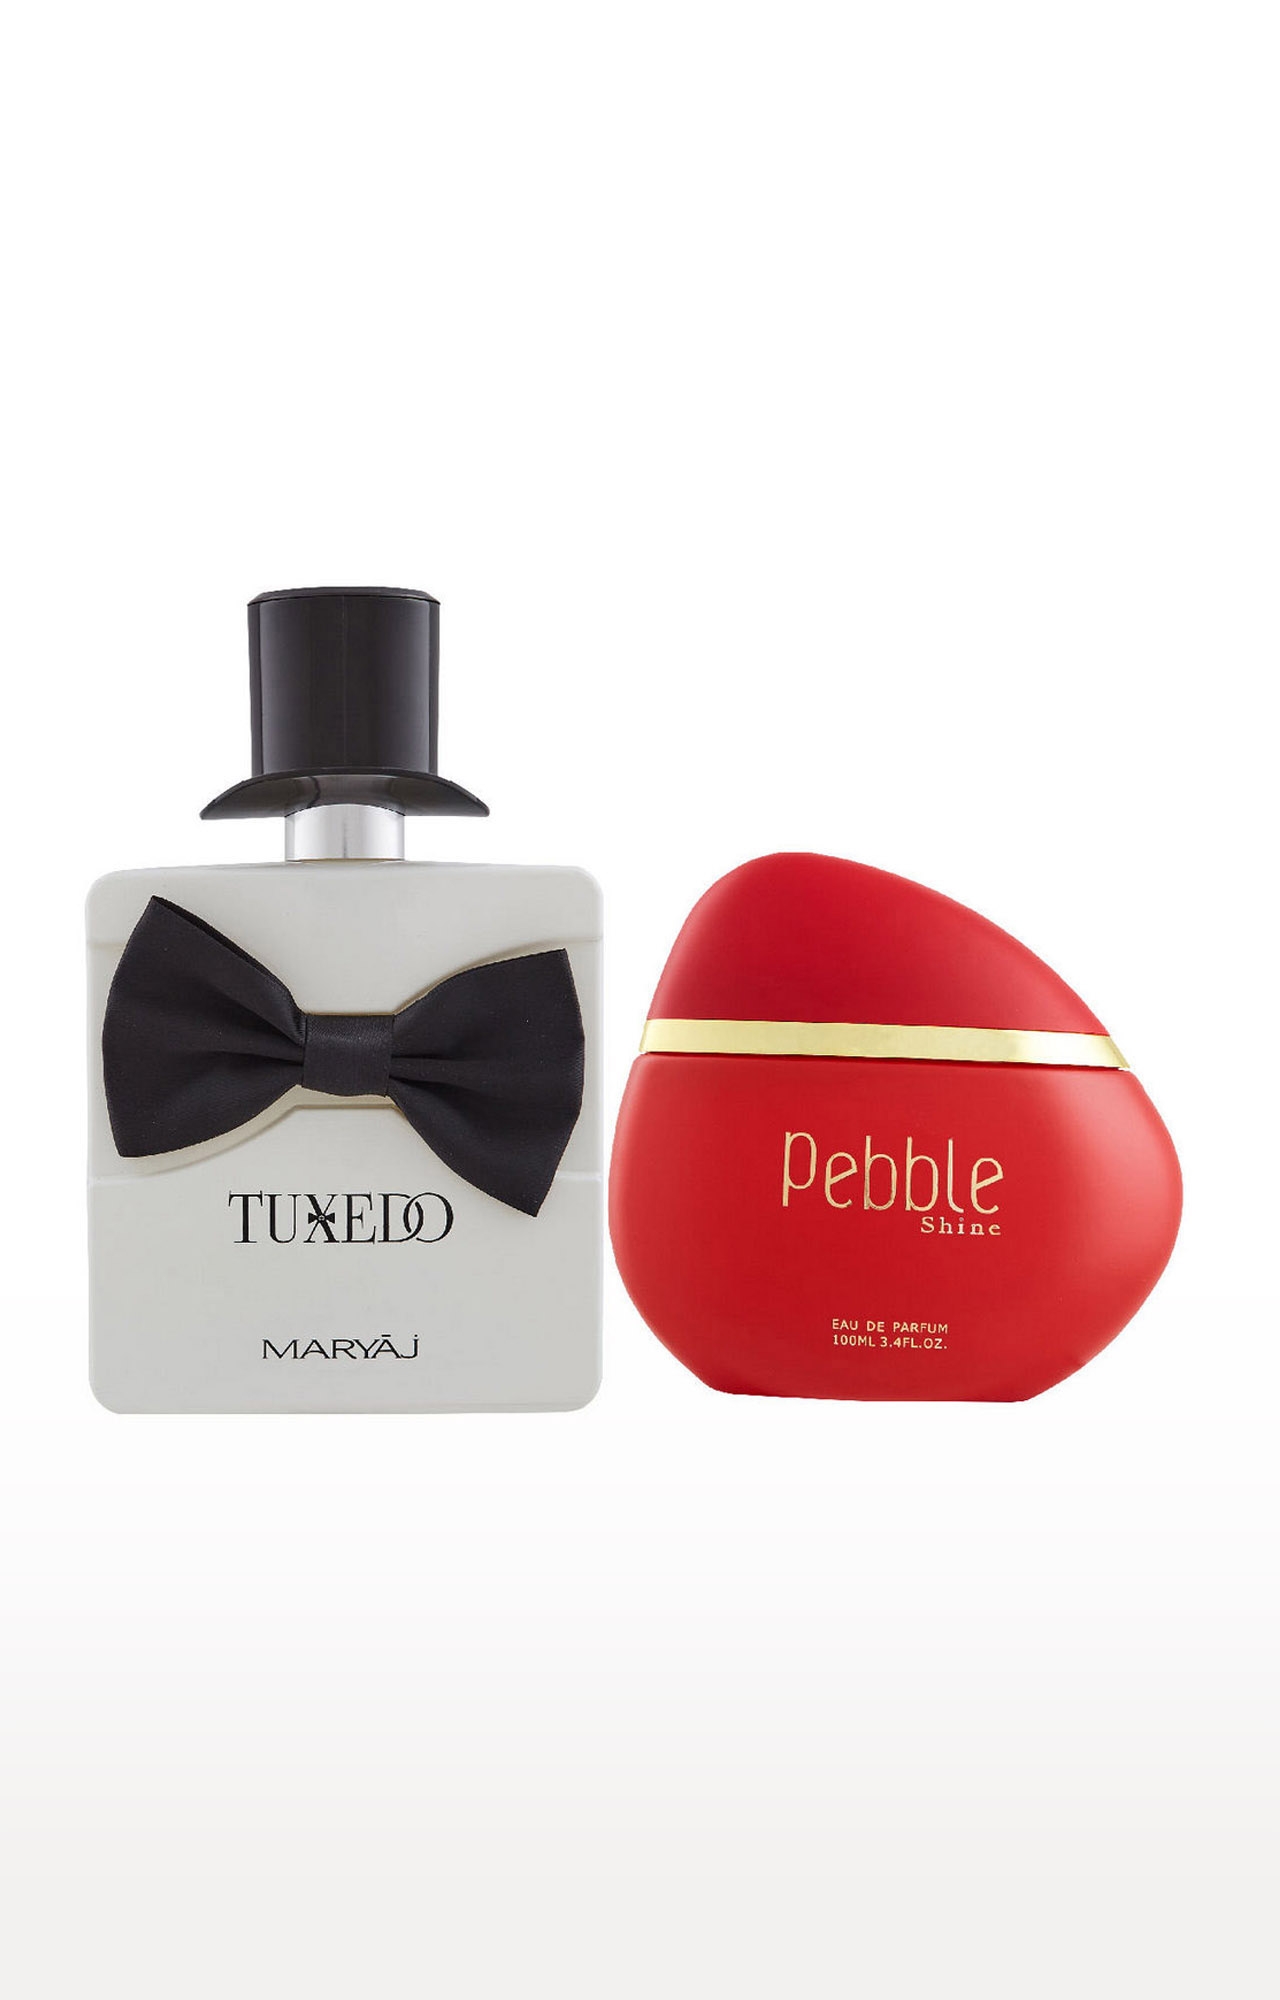 Maryaj Tuxedo Eau De Parfum Perfume 100ml for Men and Maryaj Pebble Shine Eau De Parfum Fruity Perfume 100ml for Women